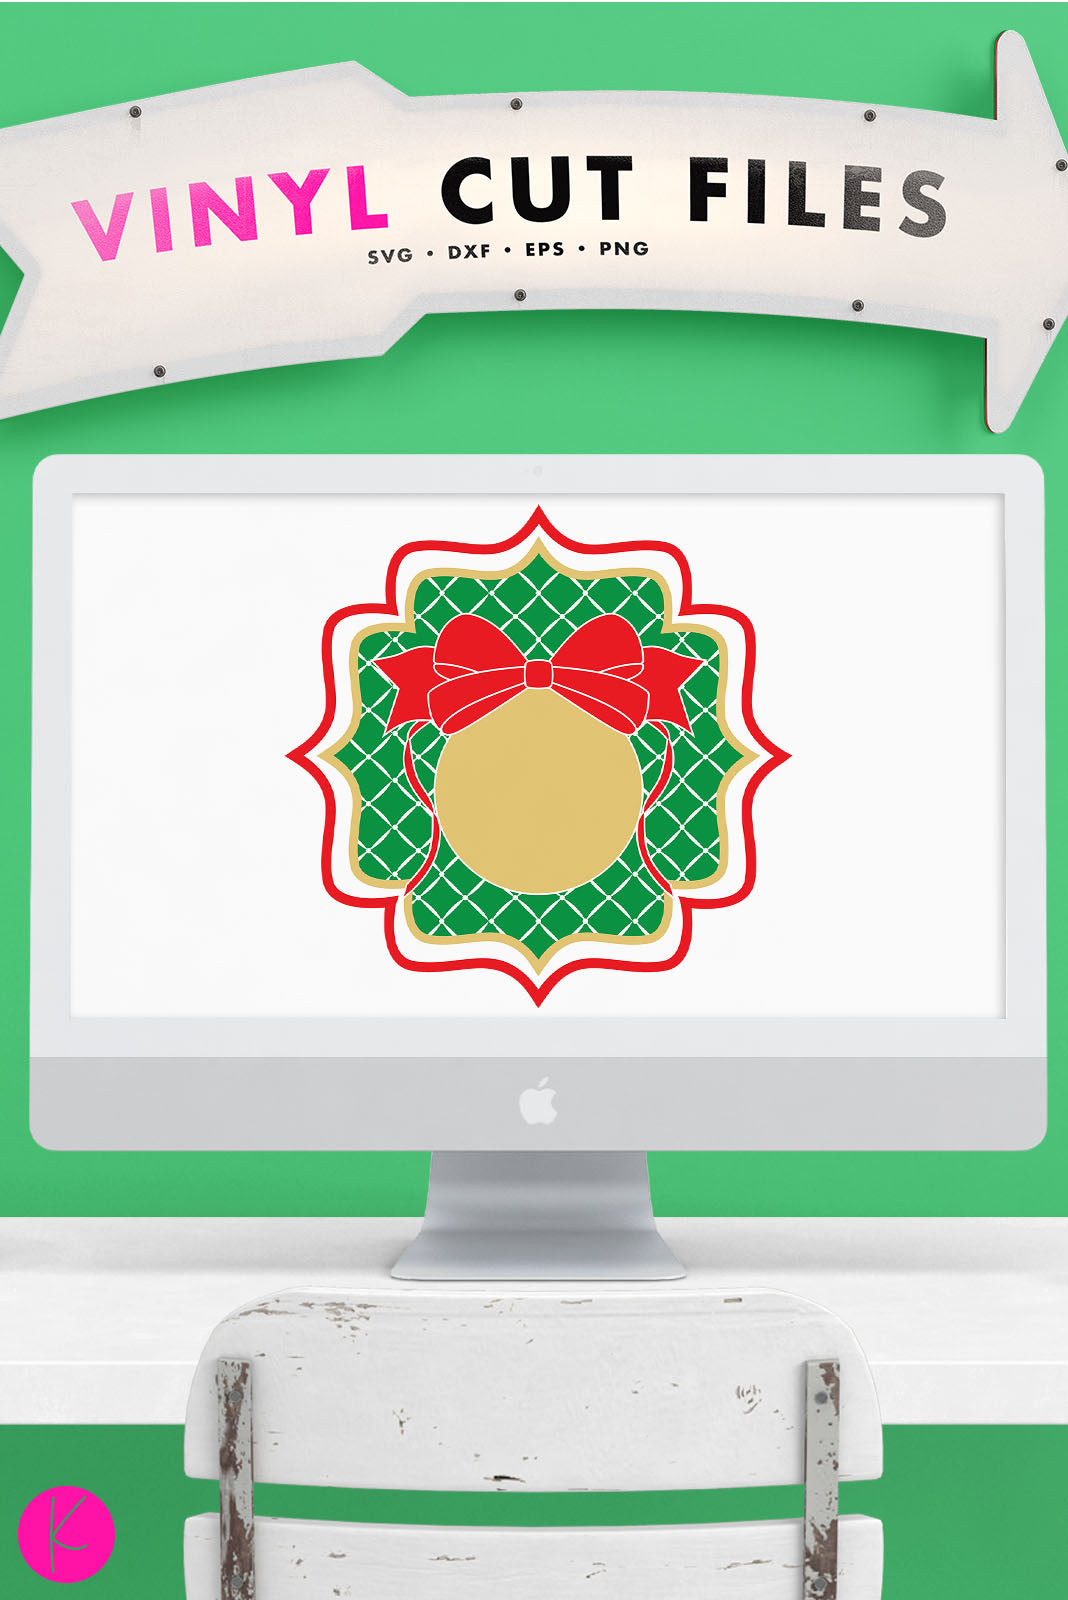 Download Christmas Ornament Monogram Frame SVG File | Kelly Lollar ...